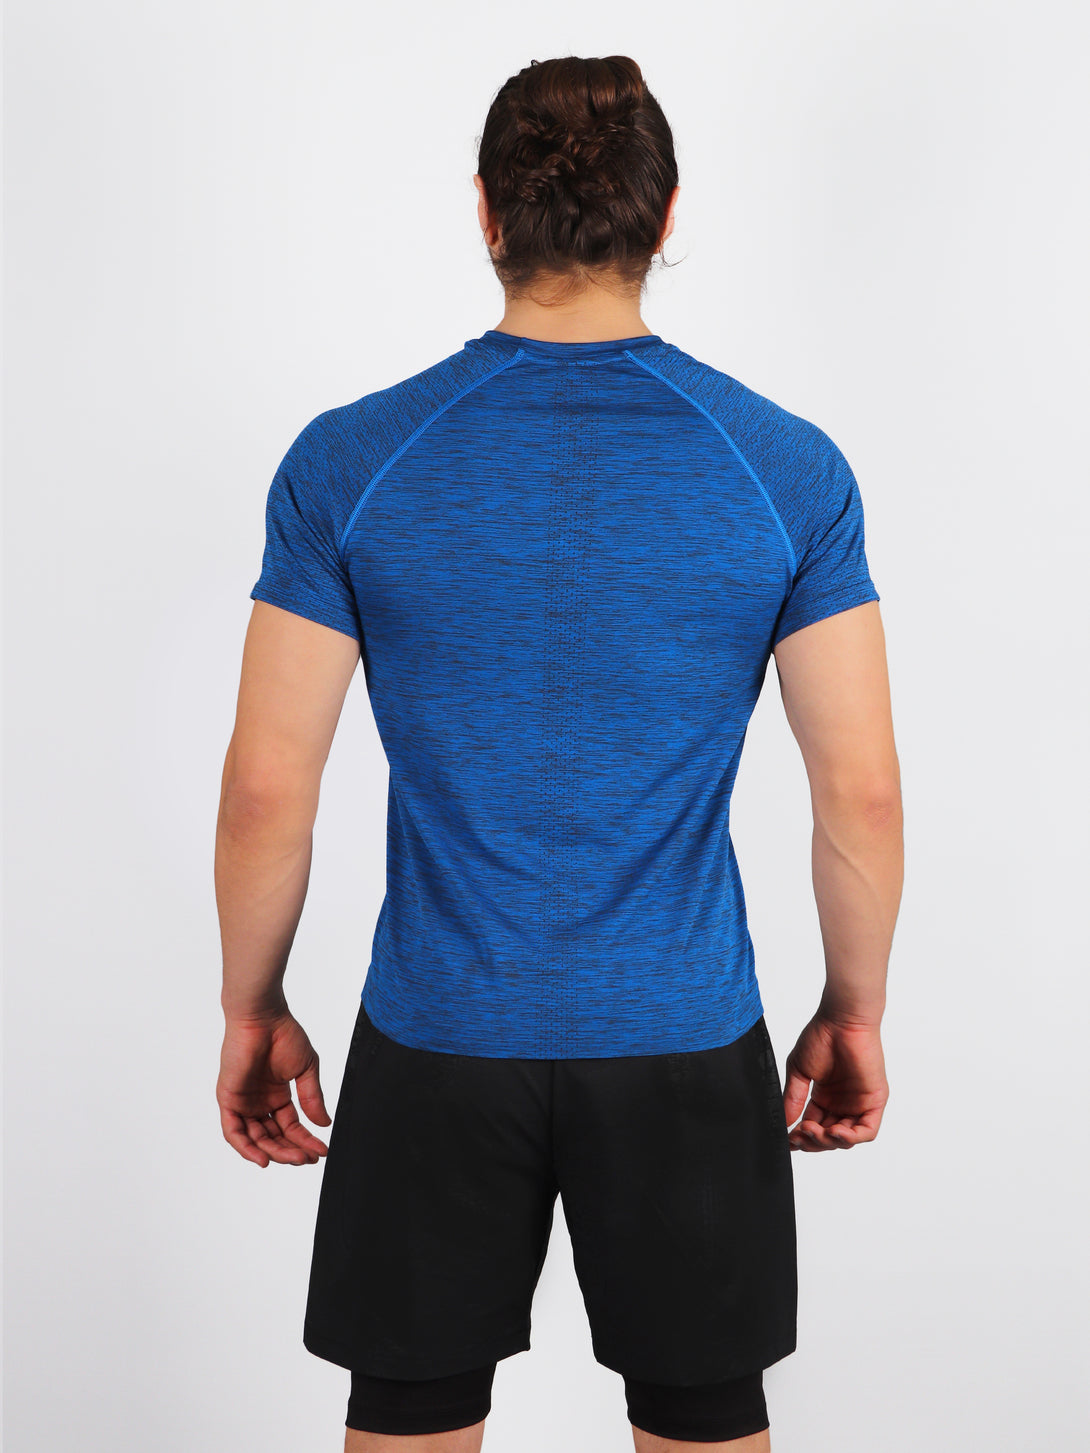 A Man Wearing Lapis Blue Color Seamless Workout Comfort T-Shirt